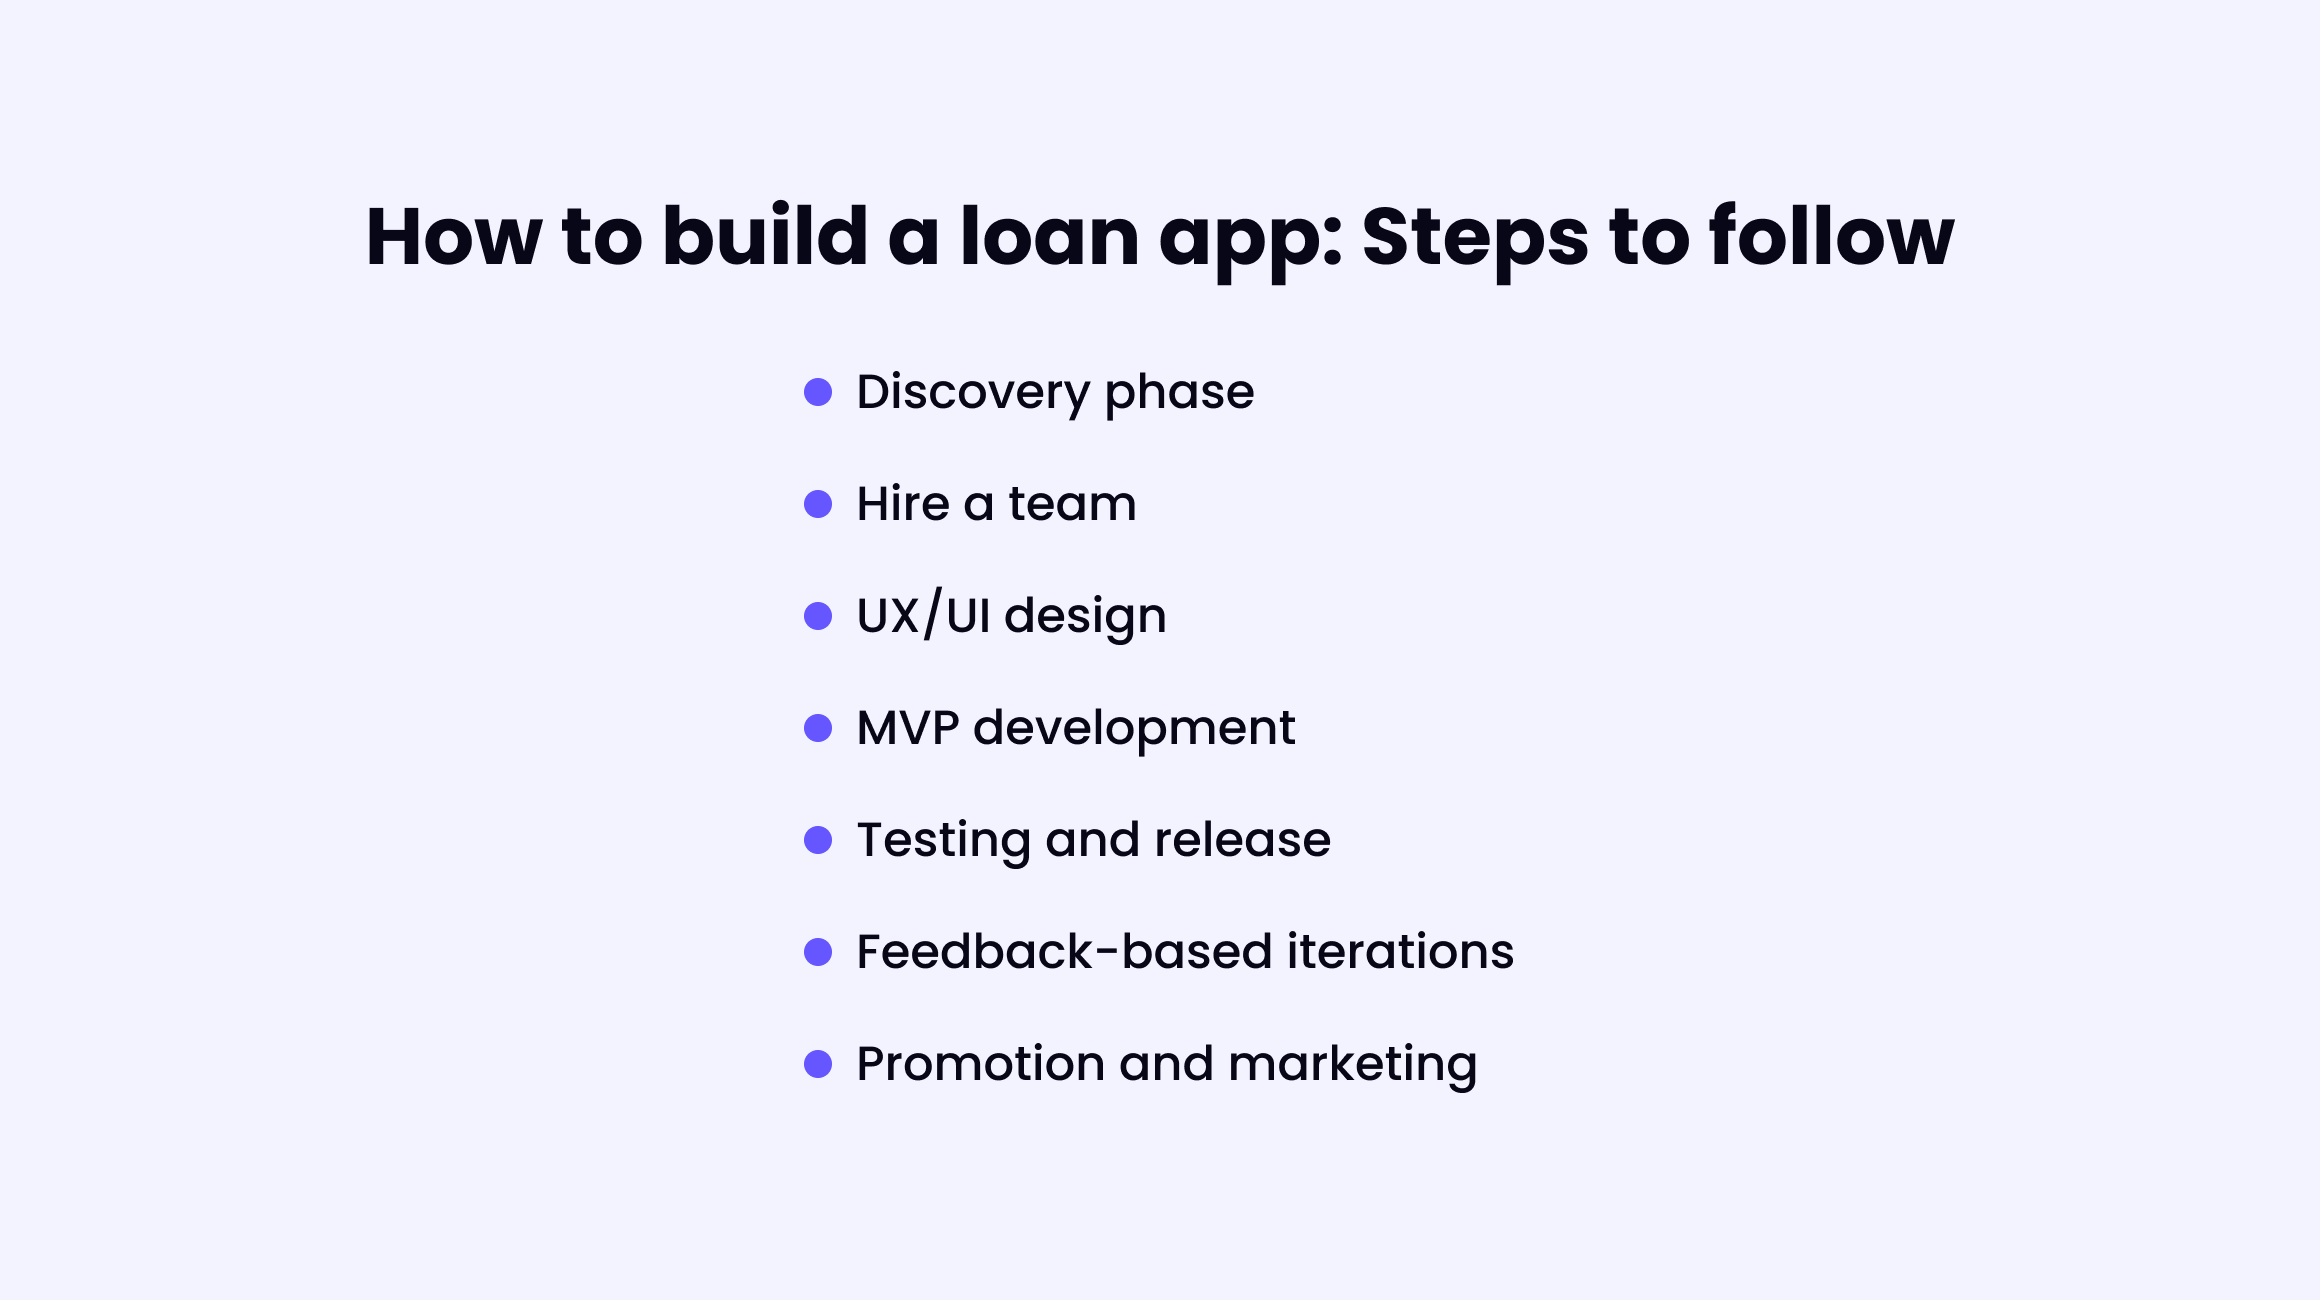 Stages of loan app development